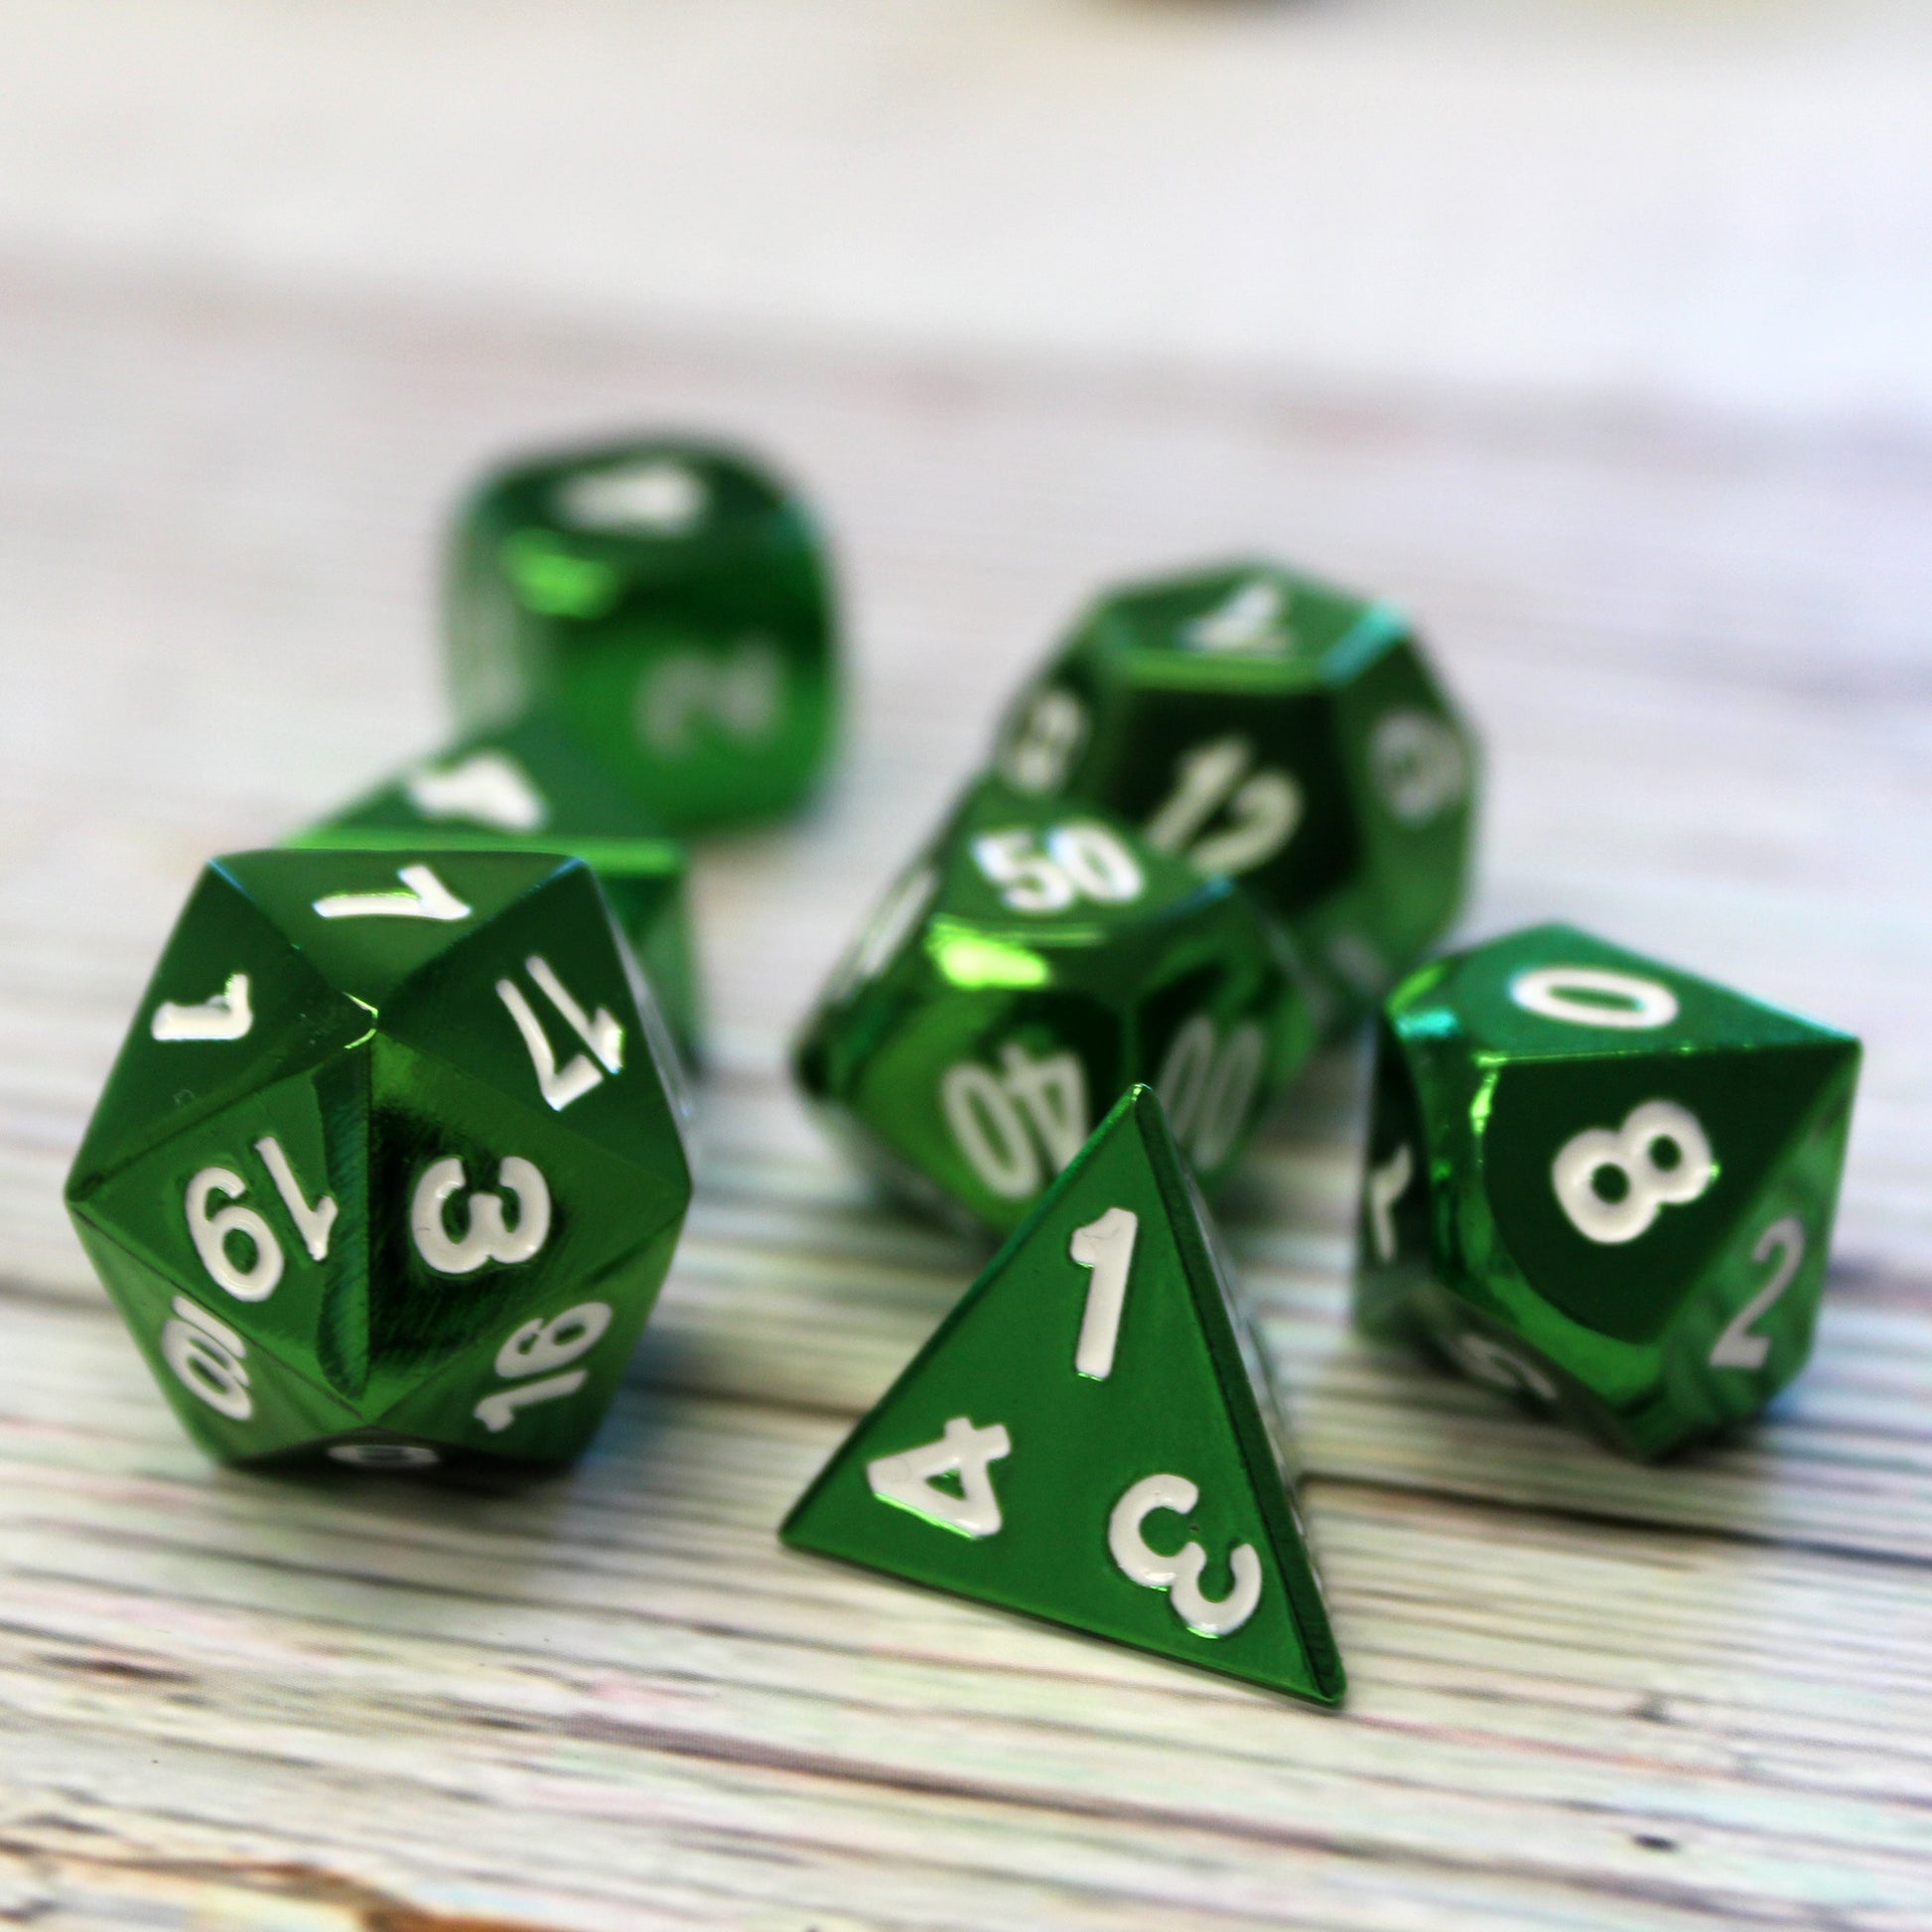 Closup of metal bright green dice set for D&D.